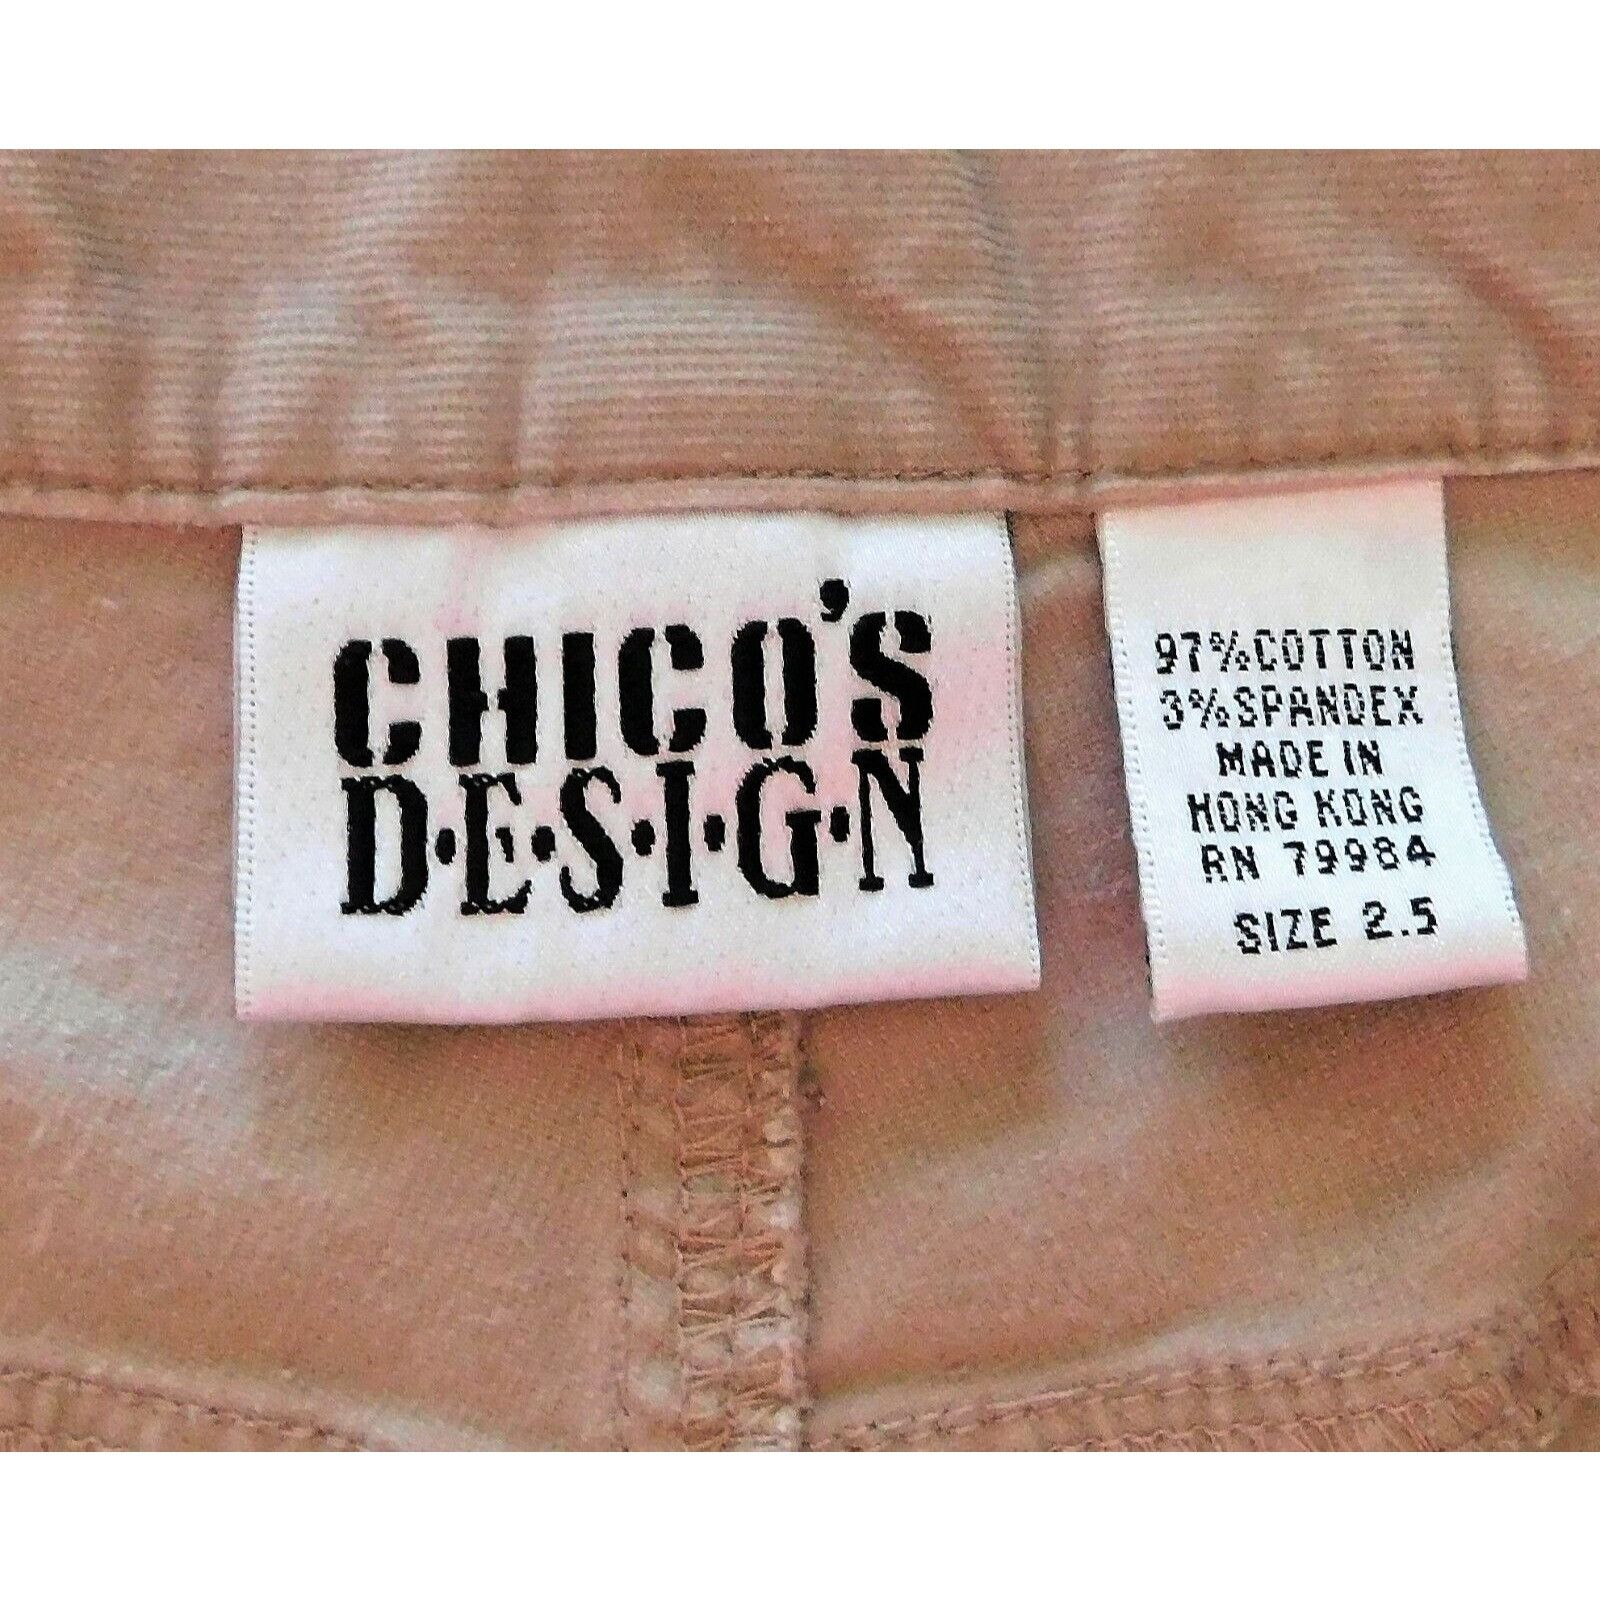 Chicos Chico's Design 2.5 Corduroy Pants L 14 Tan Straight Leg Size 36" / US 14 / IT 50 - 6 Preview